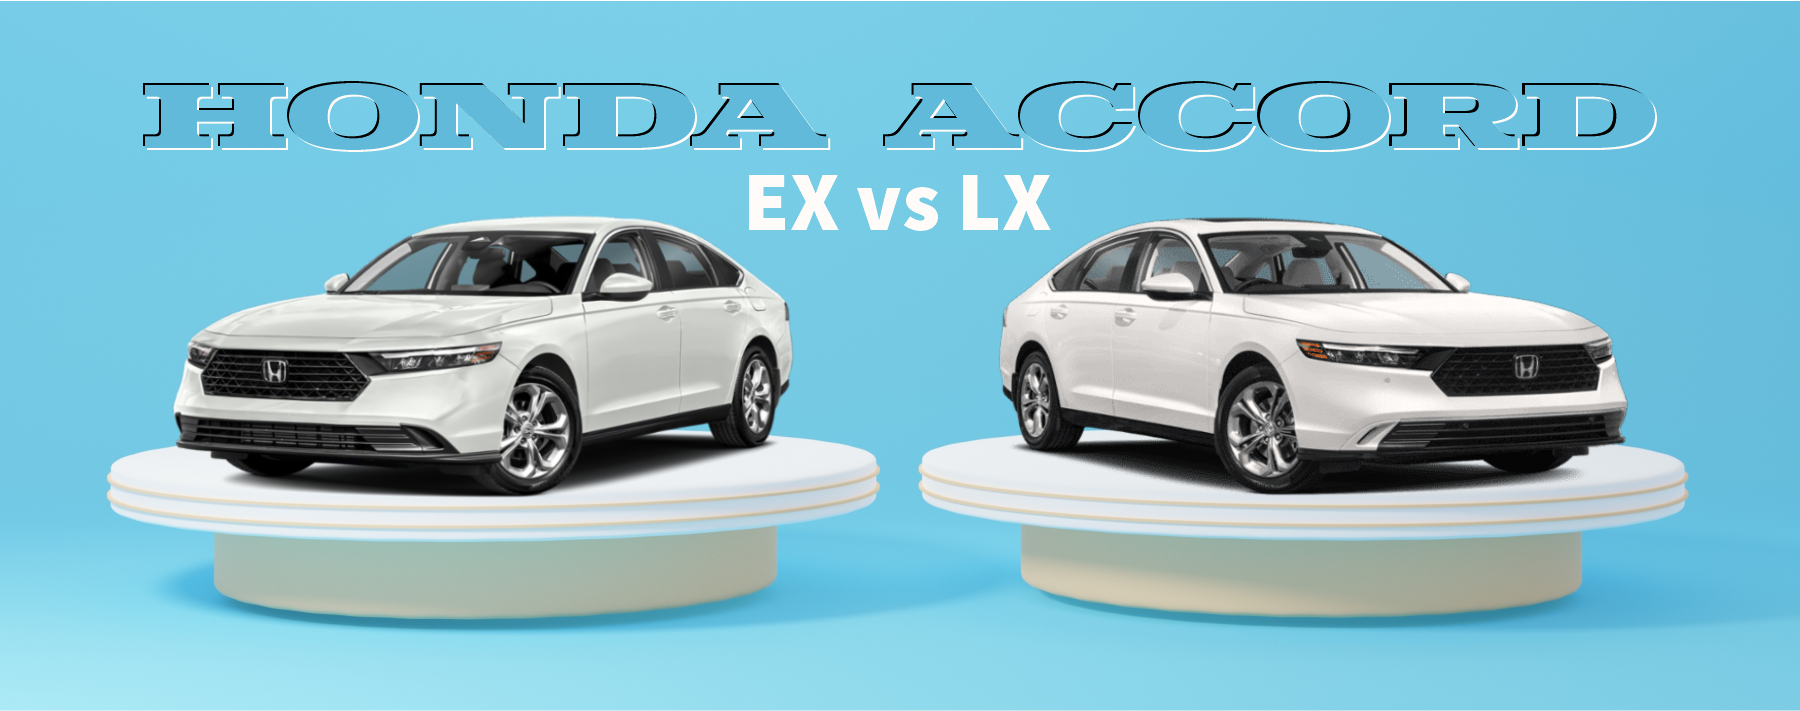 Honda Accord LX vs EX